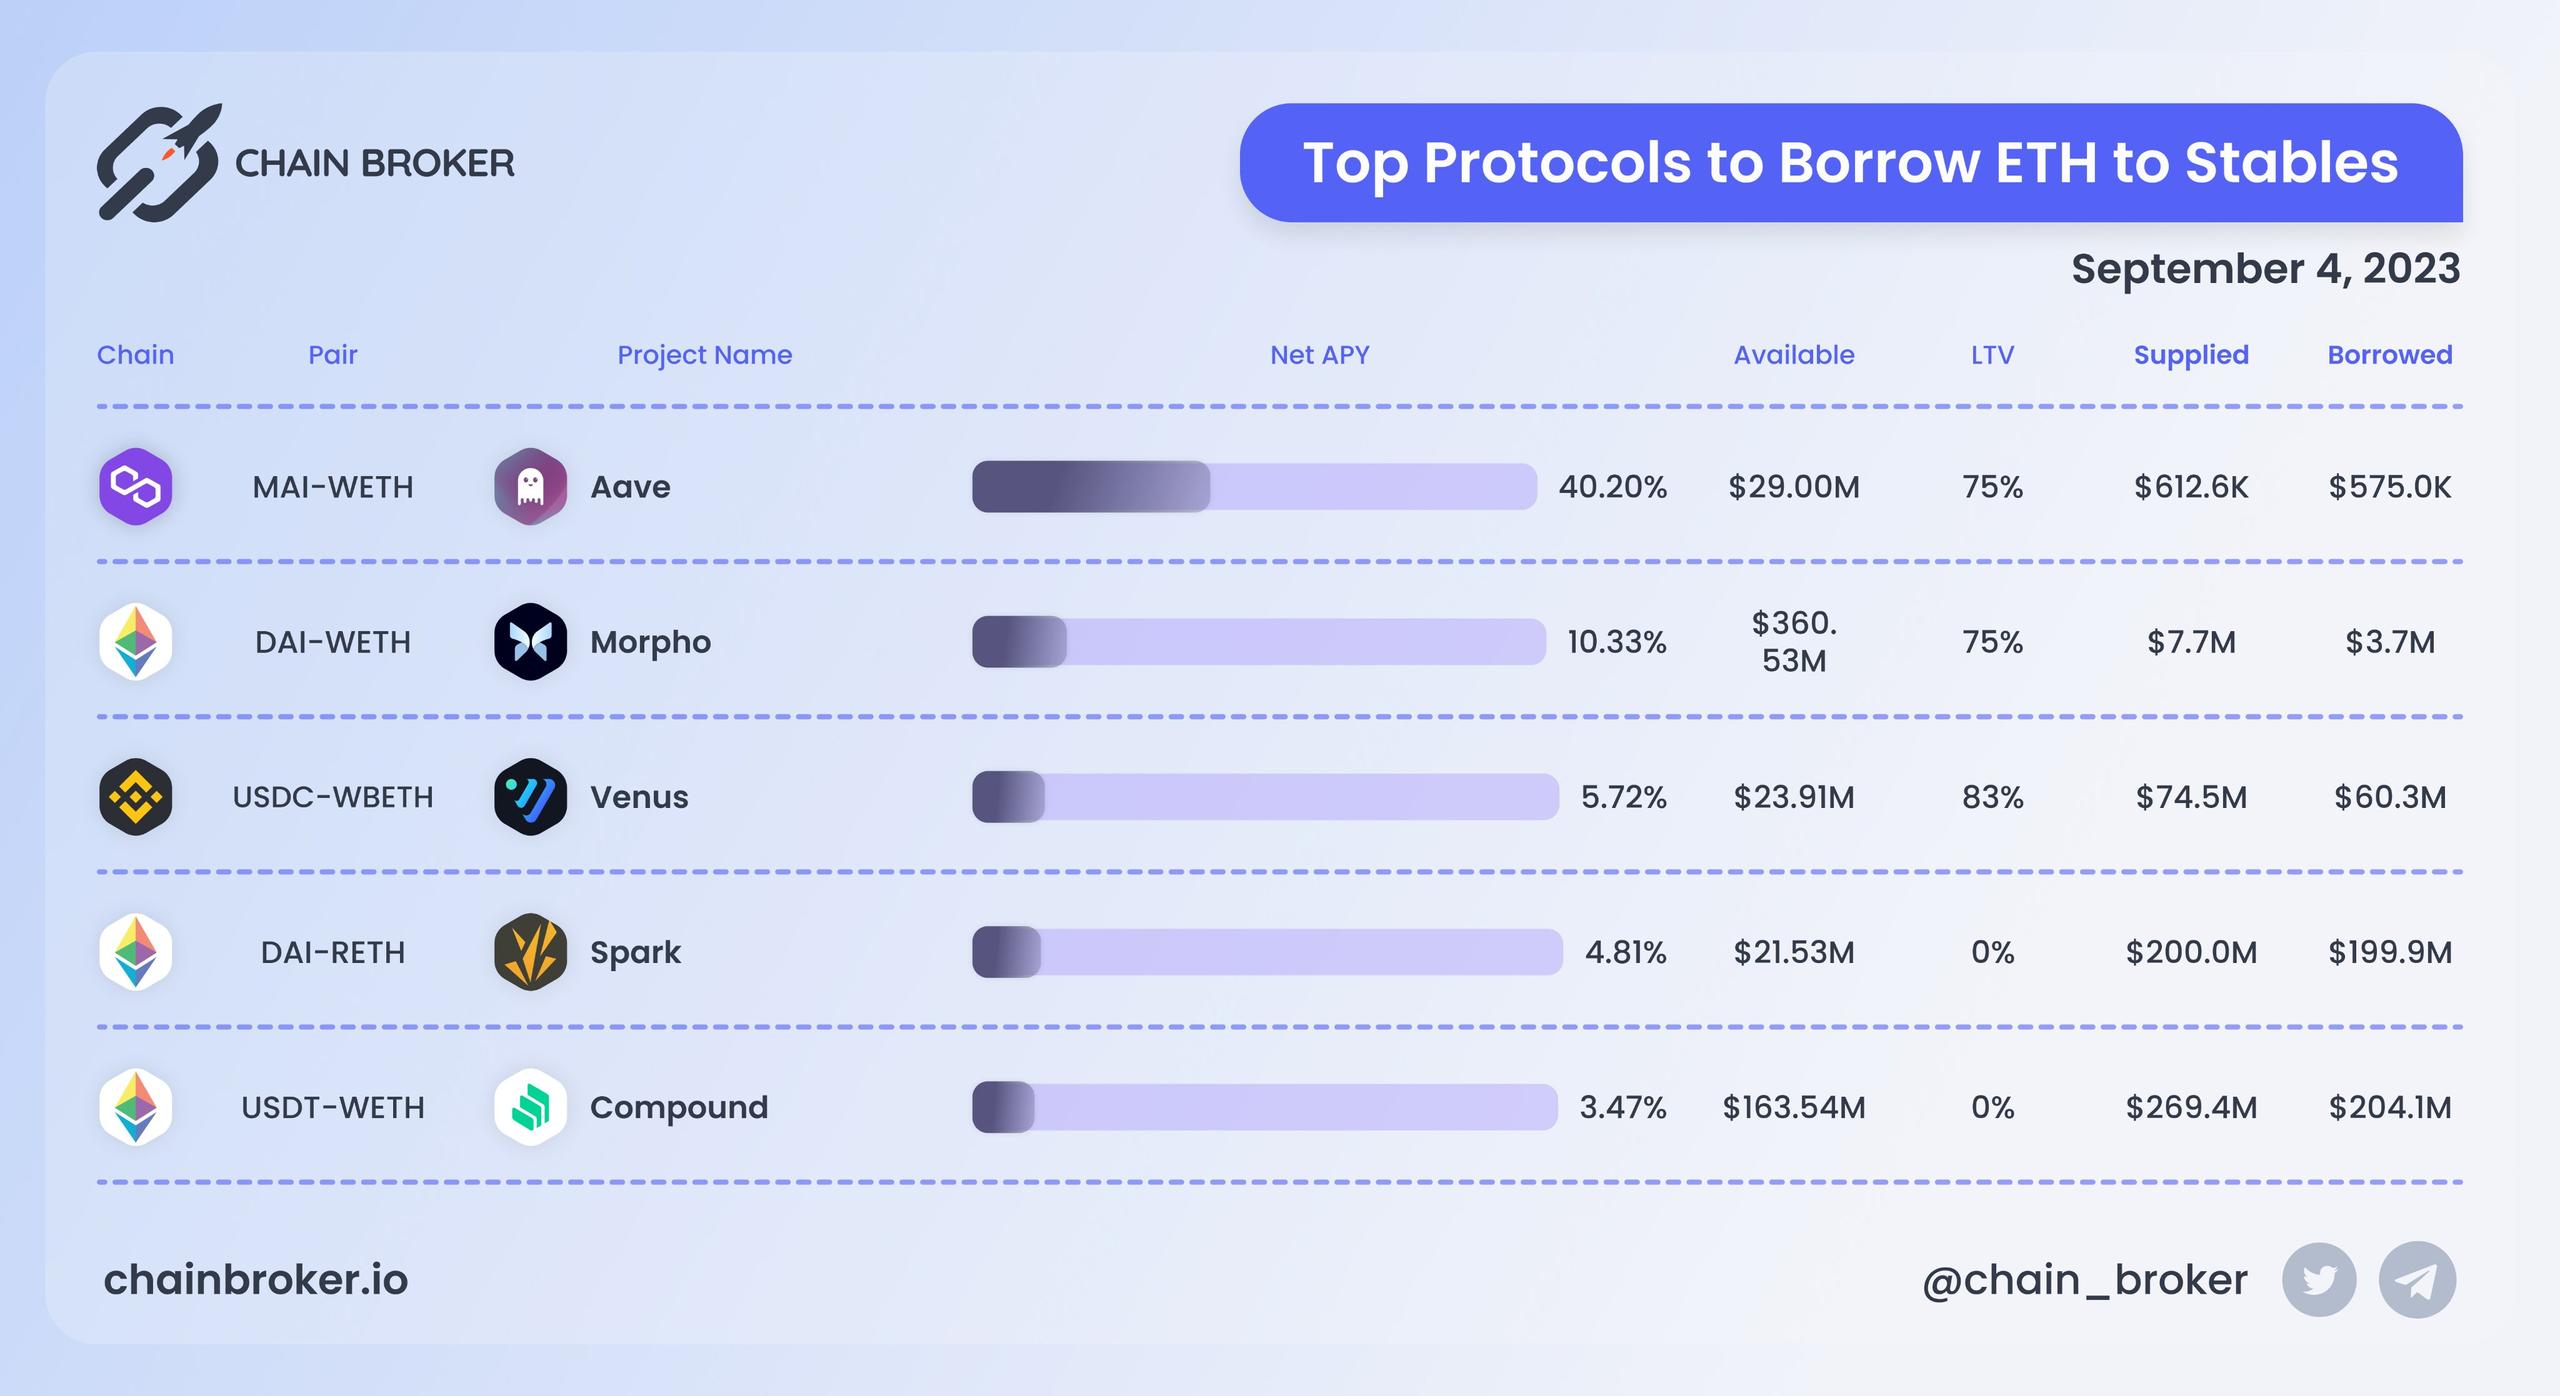 Top protocols to borrow stablecoins to BTC